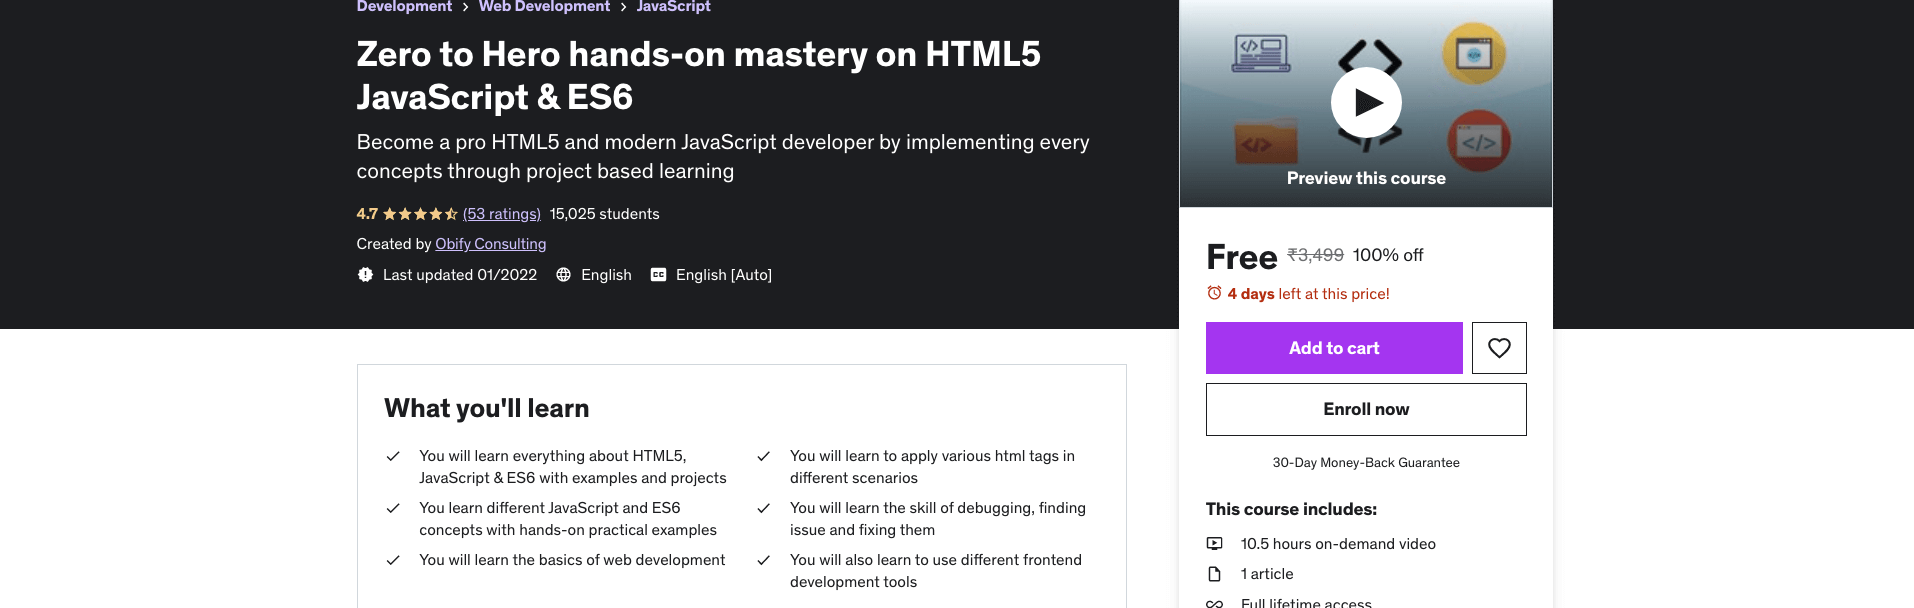 Zero to Hero hands-on mastery on HTML5 JavaScript & ES6